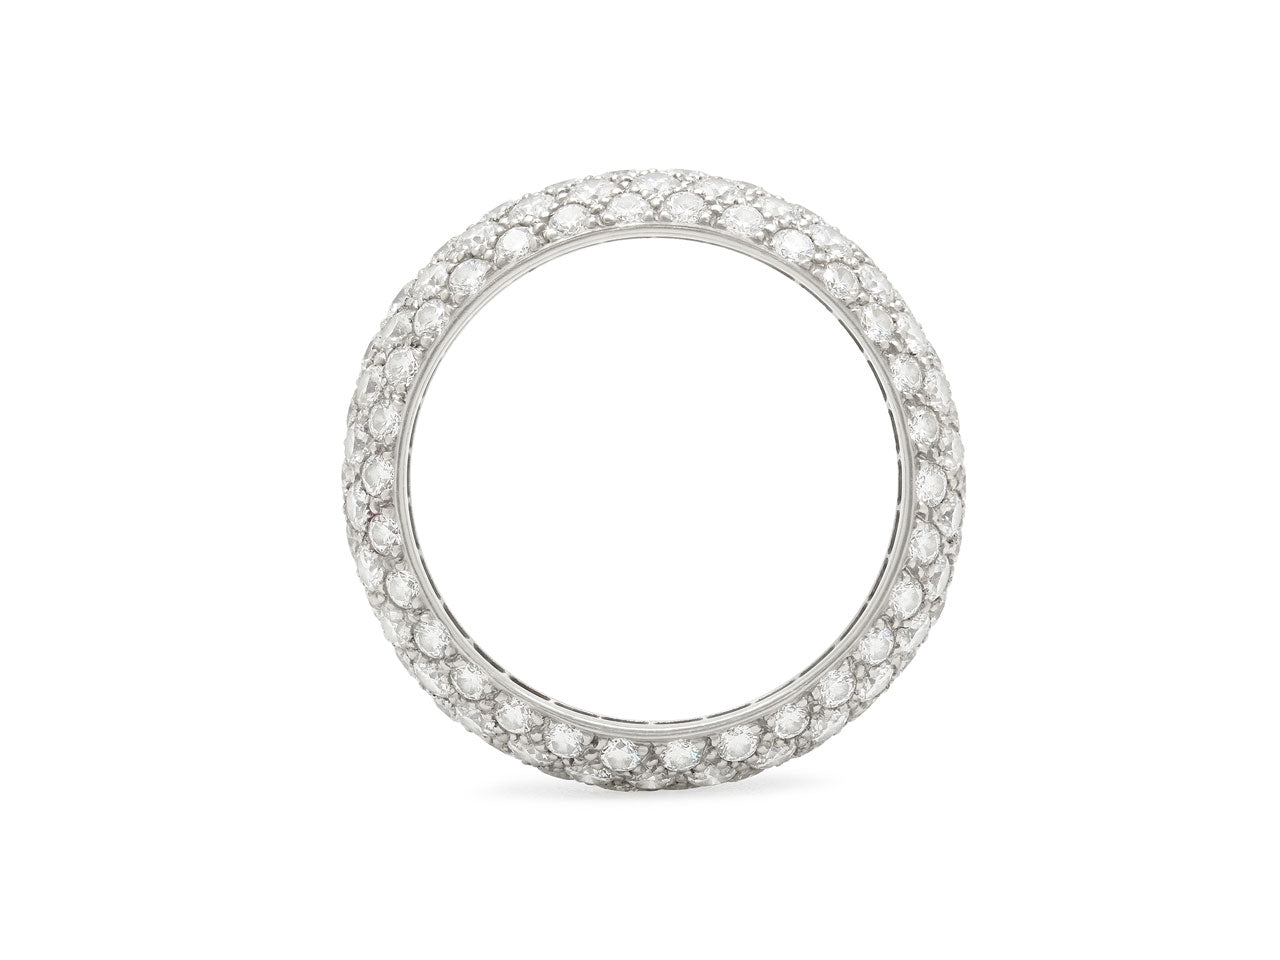 Tiffany & Co. 'Soleste' Diamond Band Ring in Platinum